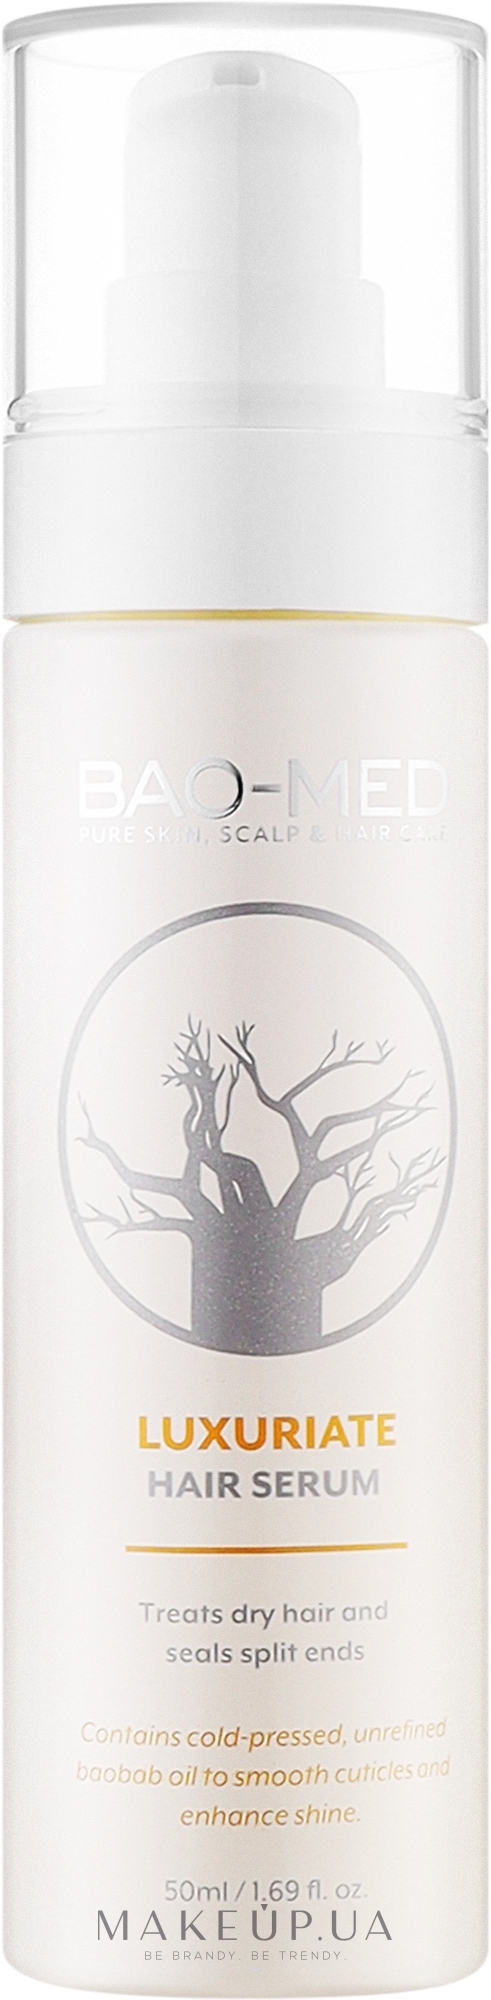 Сыворотка для волос с маслом баобаба - Bao-Med Luxuriate Hair Serum — фото 50ml